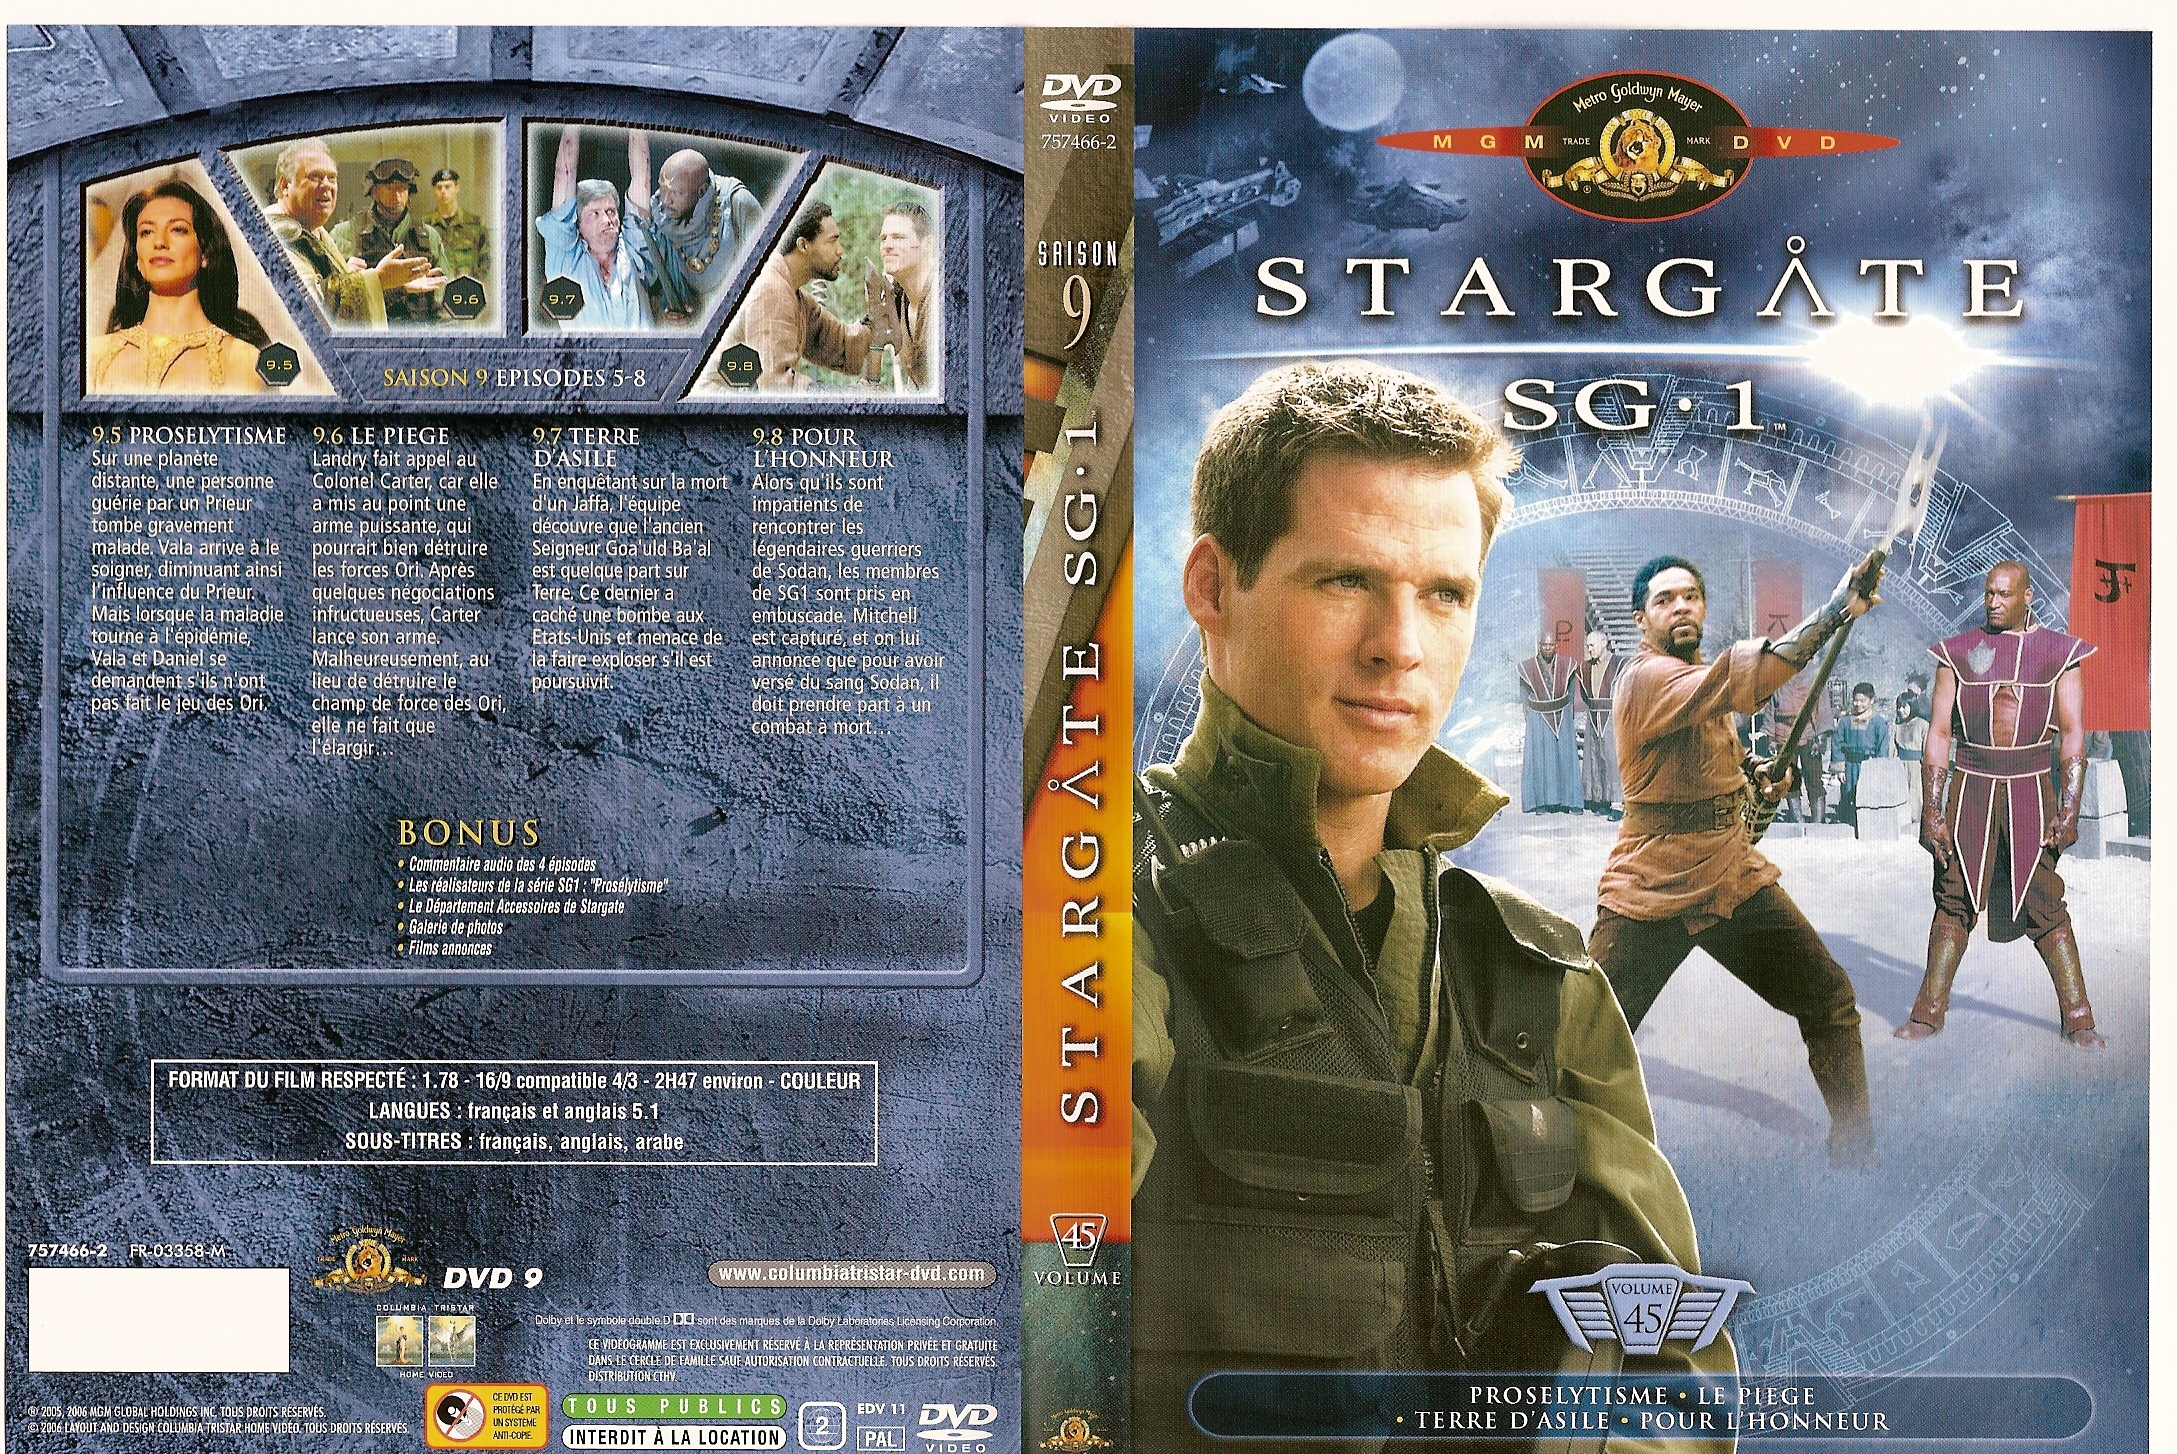 Jaquette DVD Stargate SG1 vol 45